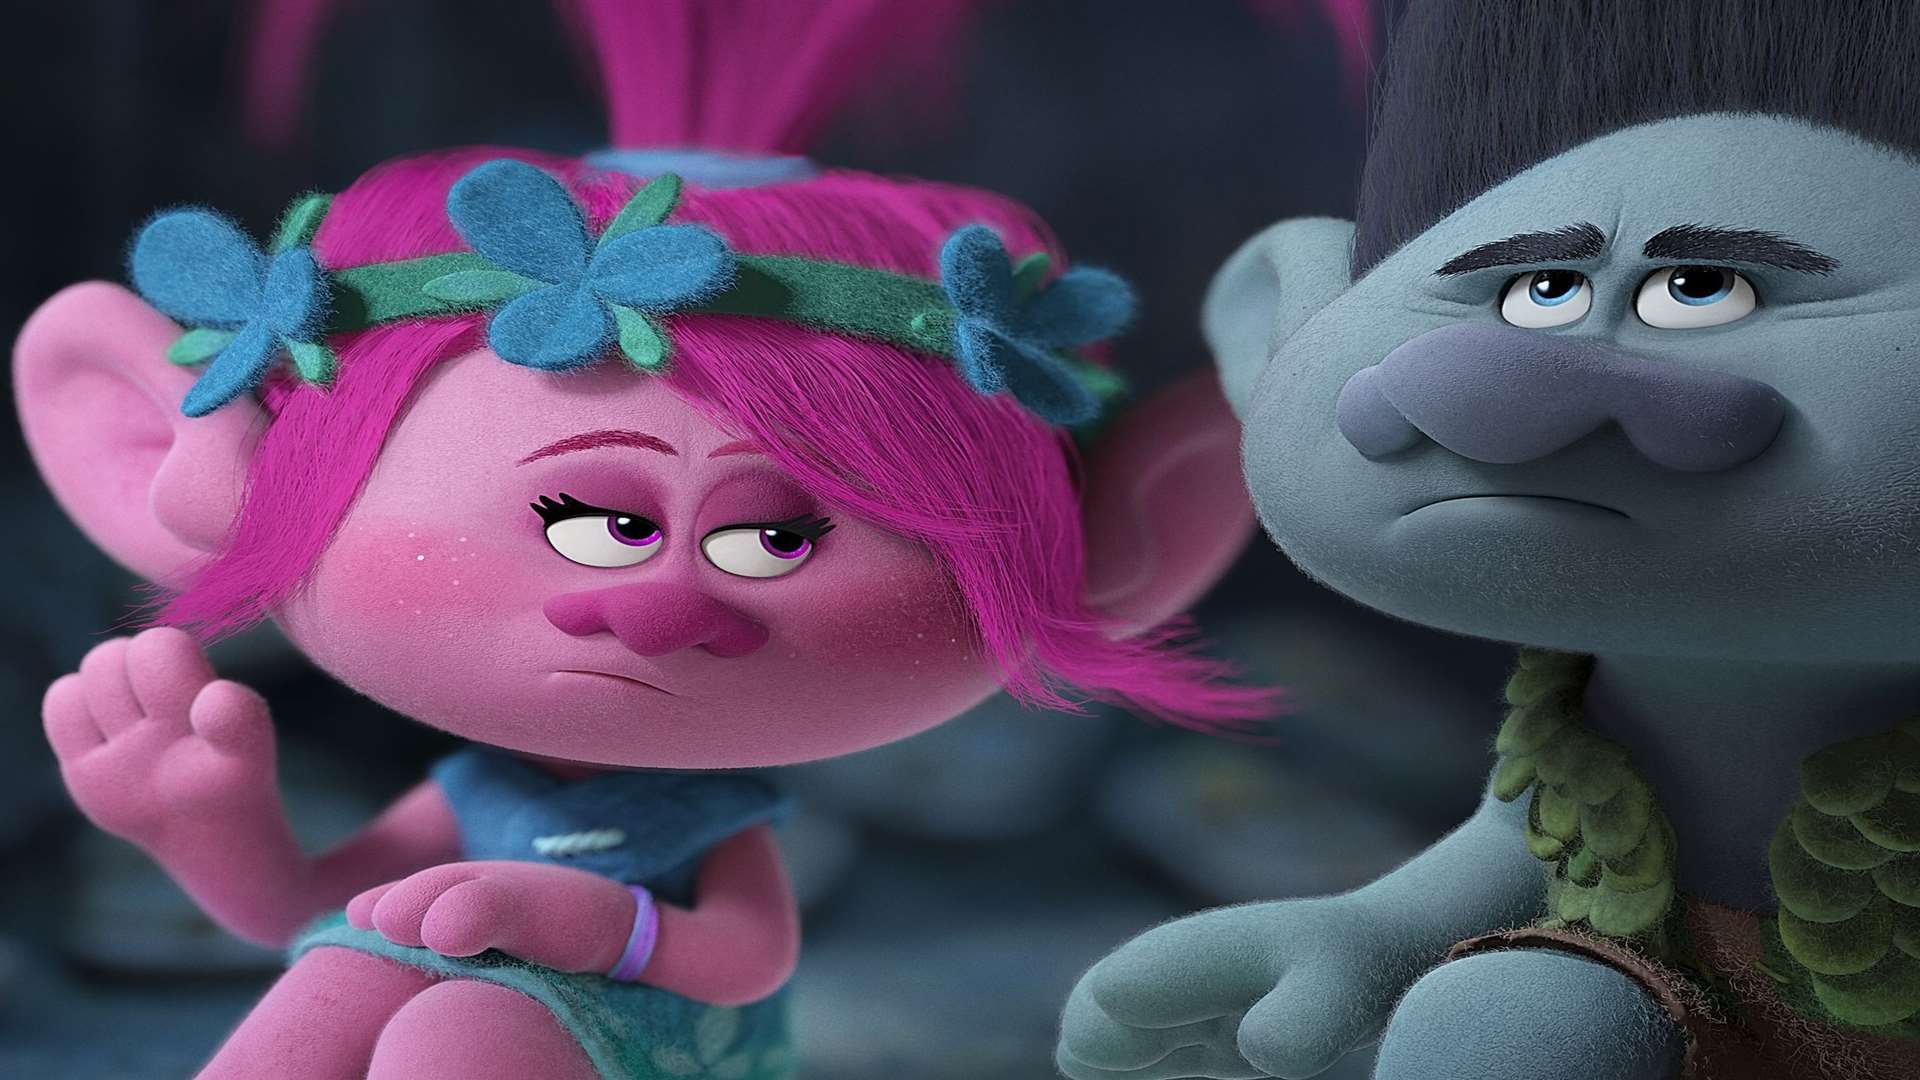 Dreamworks' new animated film Trolls